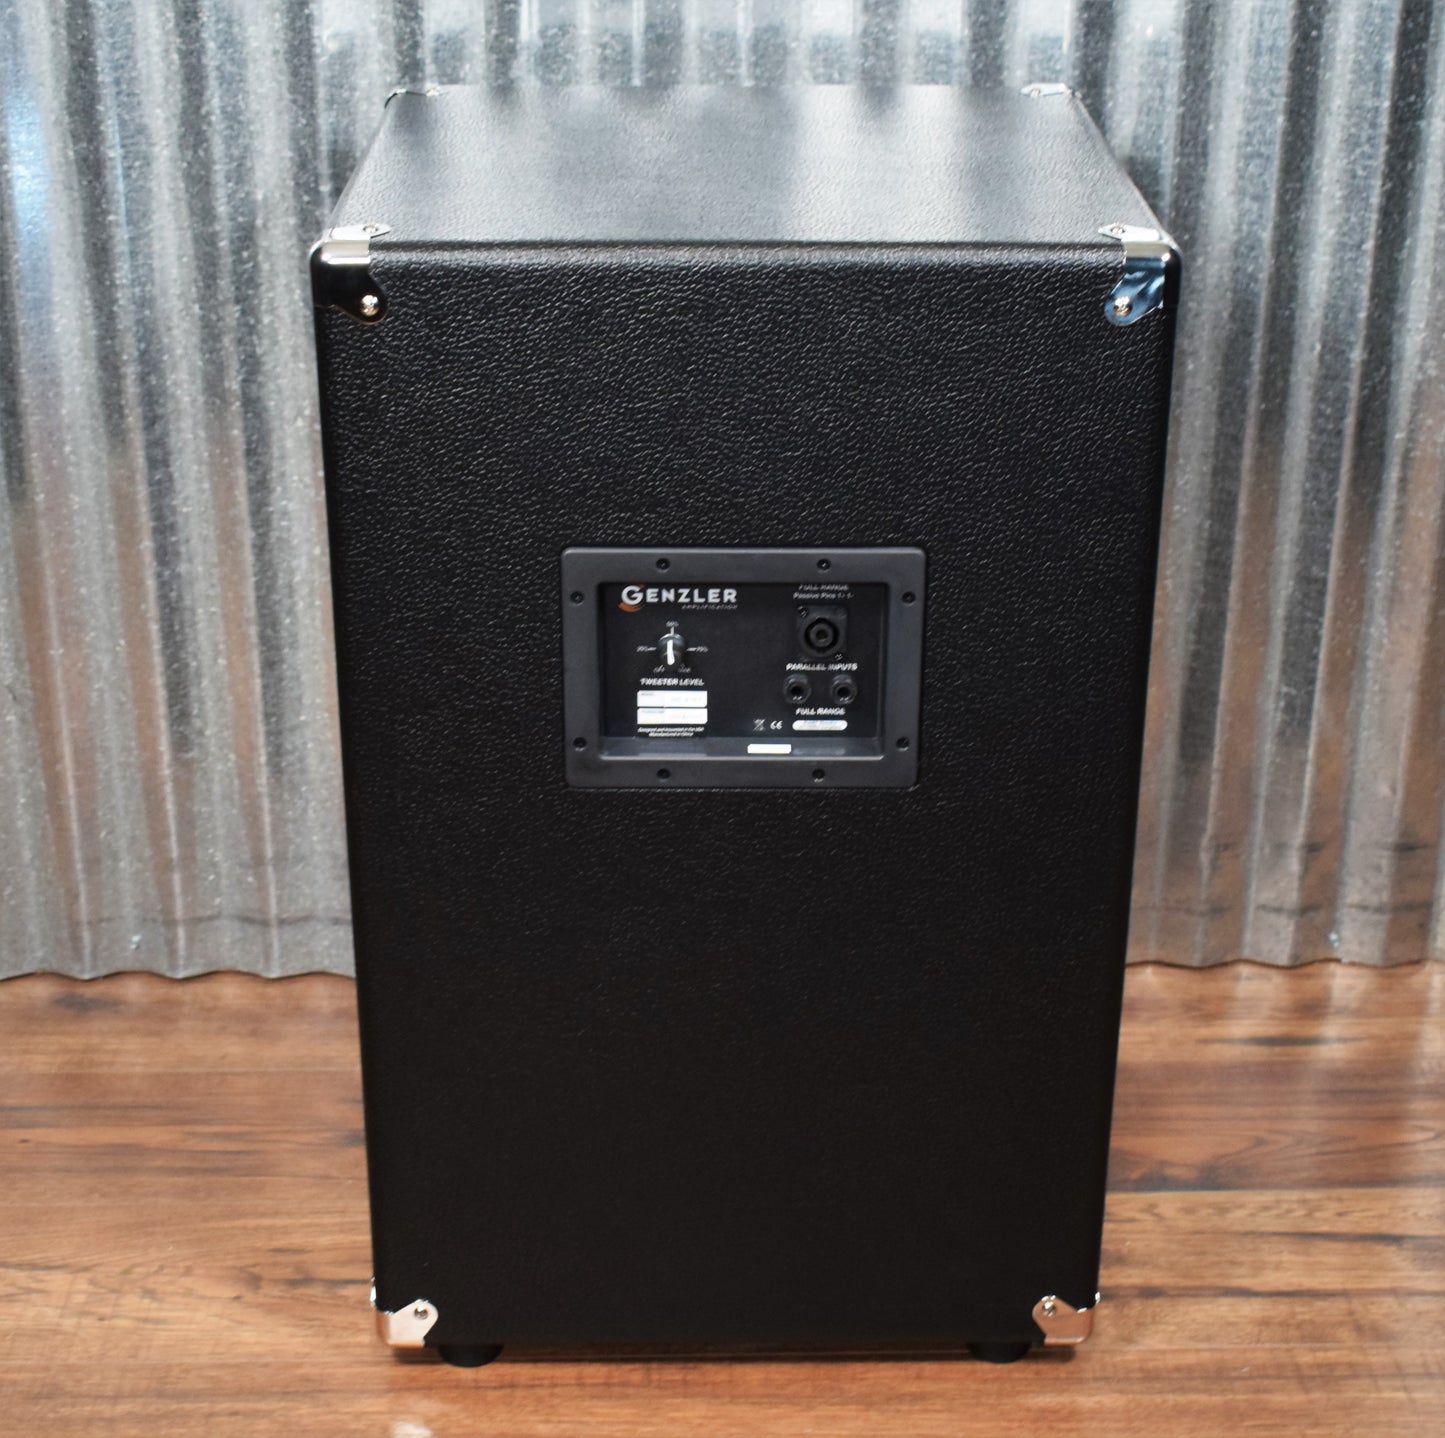 Genzler NC-210T NU CLASSIC 2x10” & Tweeter 500 Watt 8 ohm Bass Amplifier Speaker Cabinet